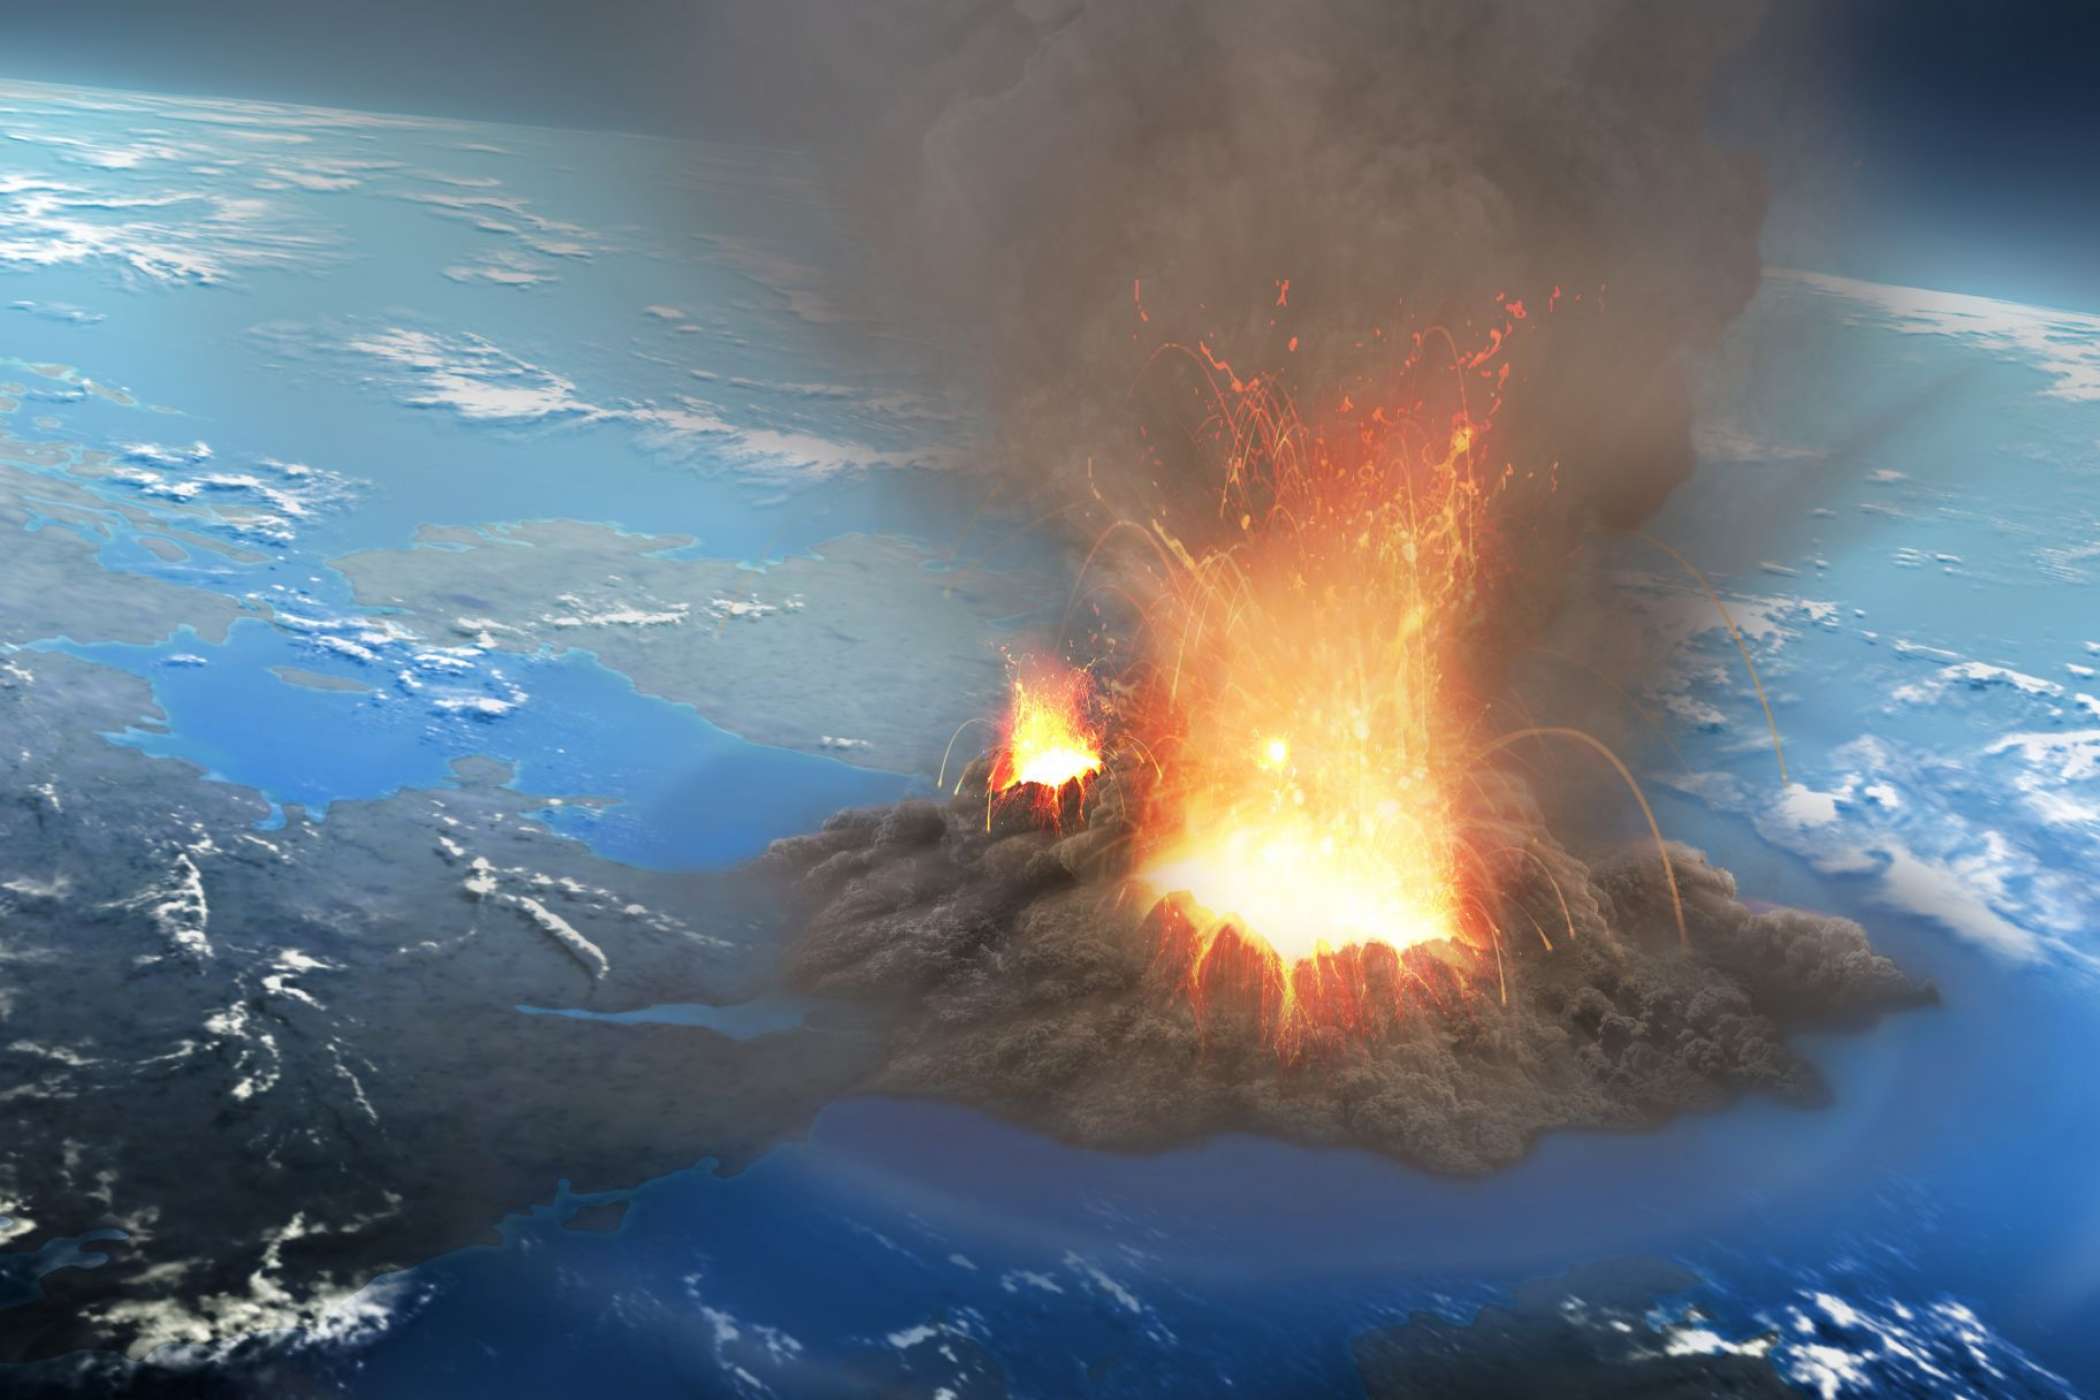 Magma intrusion beneath Long Valley Caldera confirmed by Science